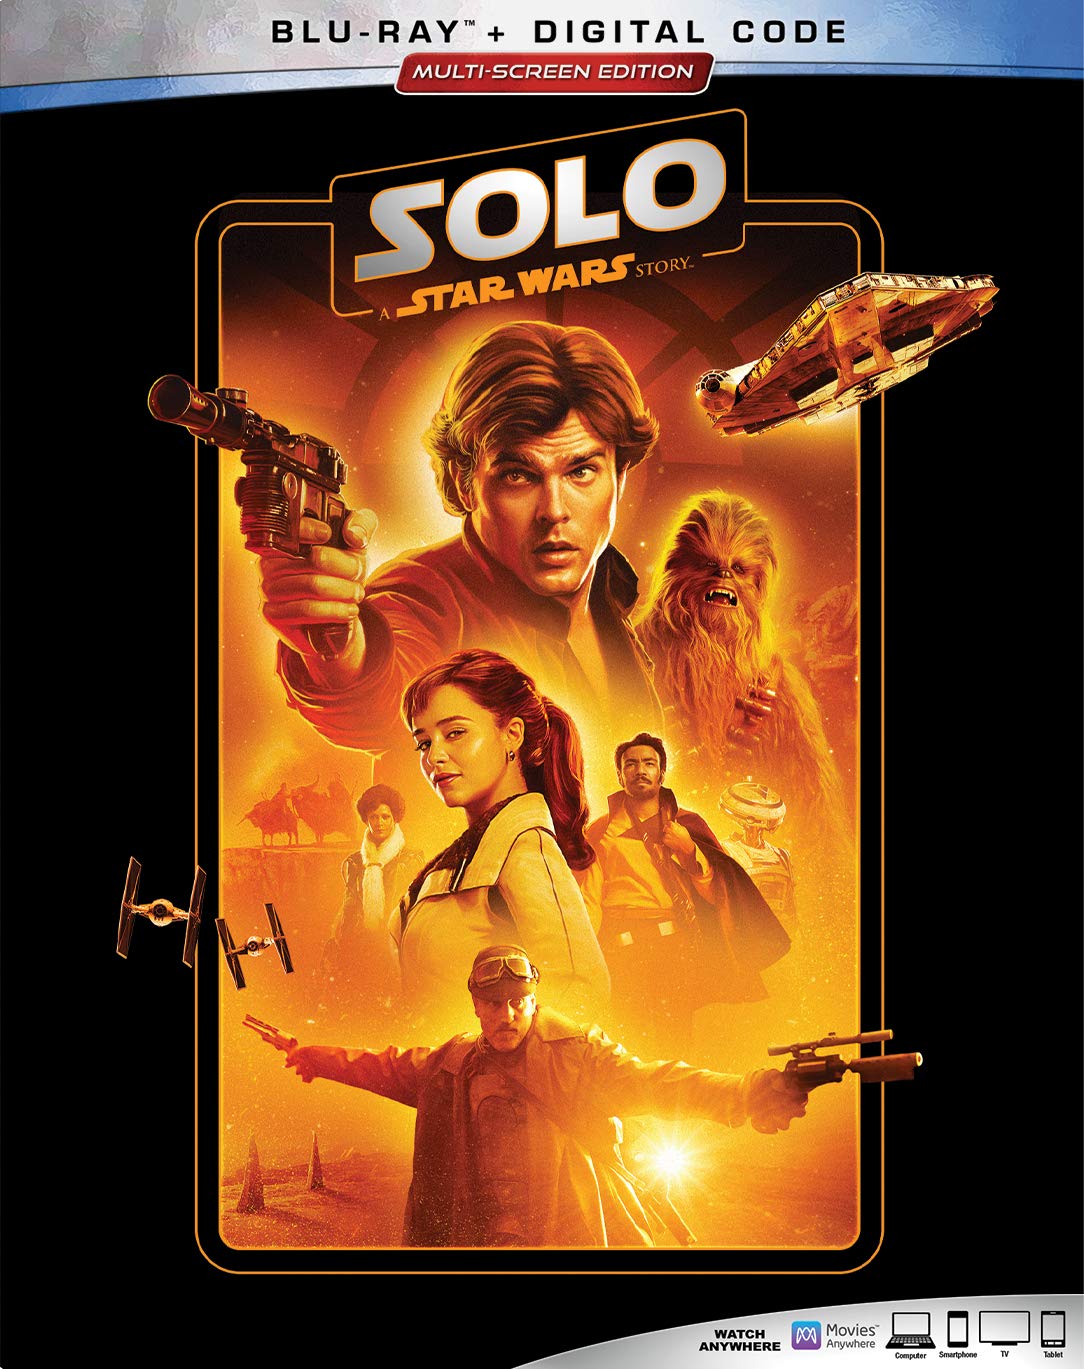 SOLO: A STAR WARS STORY - Blu-ray - Amazon $7.96